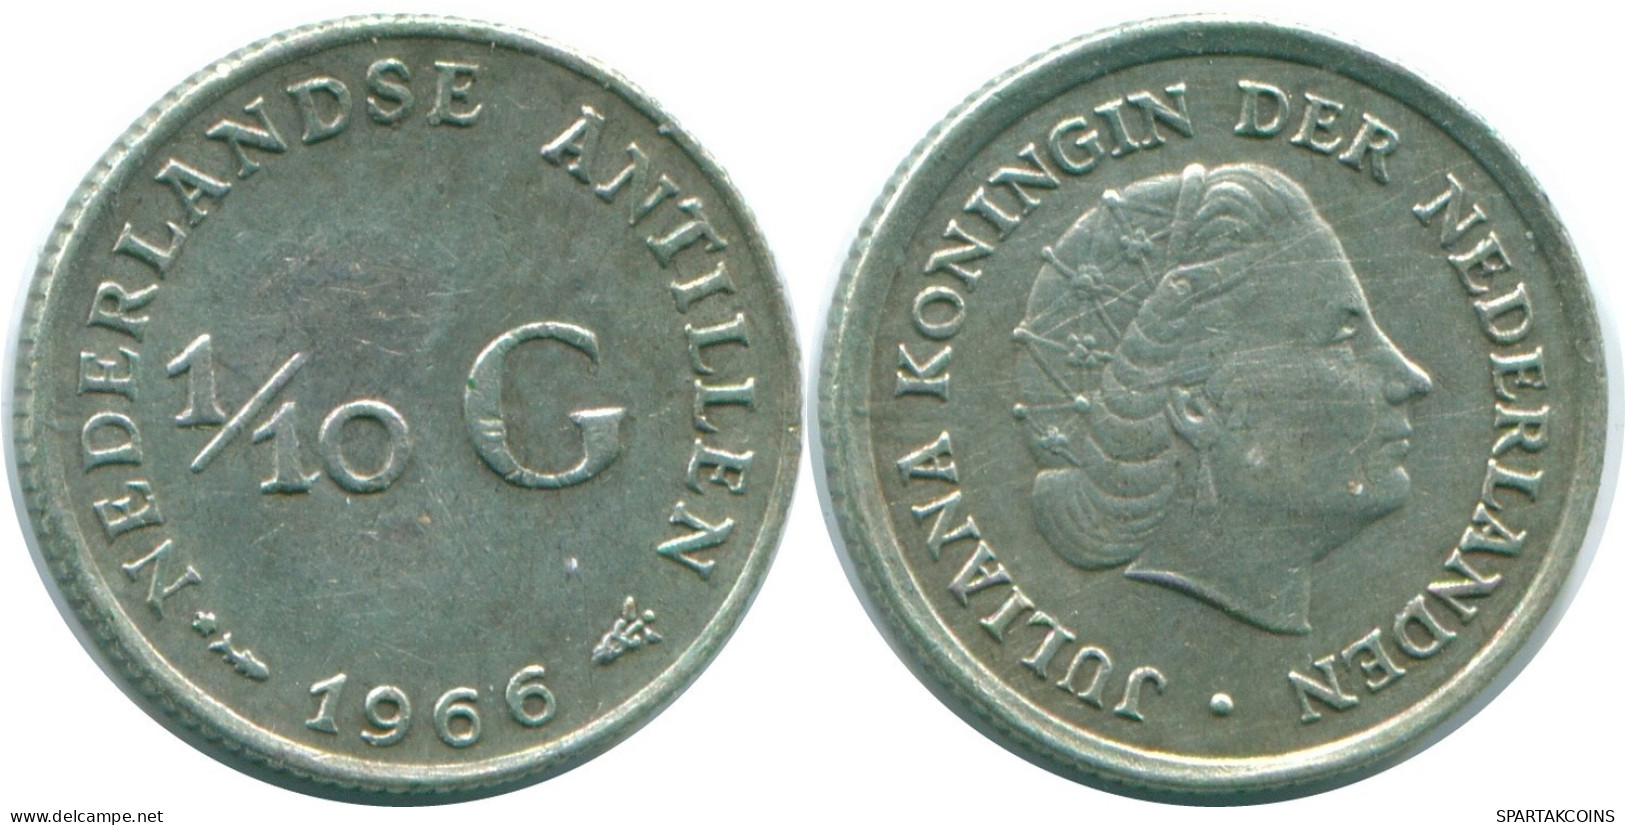 1/10 GULDEN 1966 NETHERLANDS ANTILLES SILVER Colonial Coin #NL12937.3.U.A - Antille Olandesi